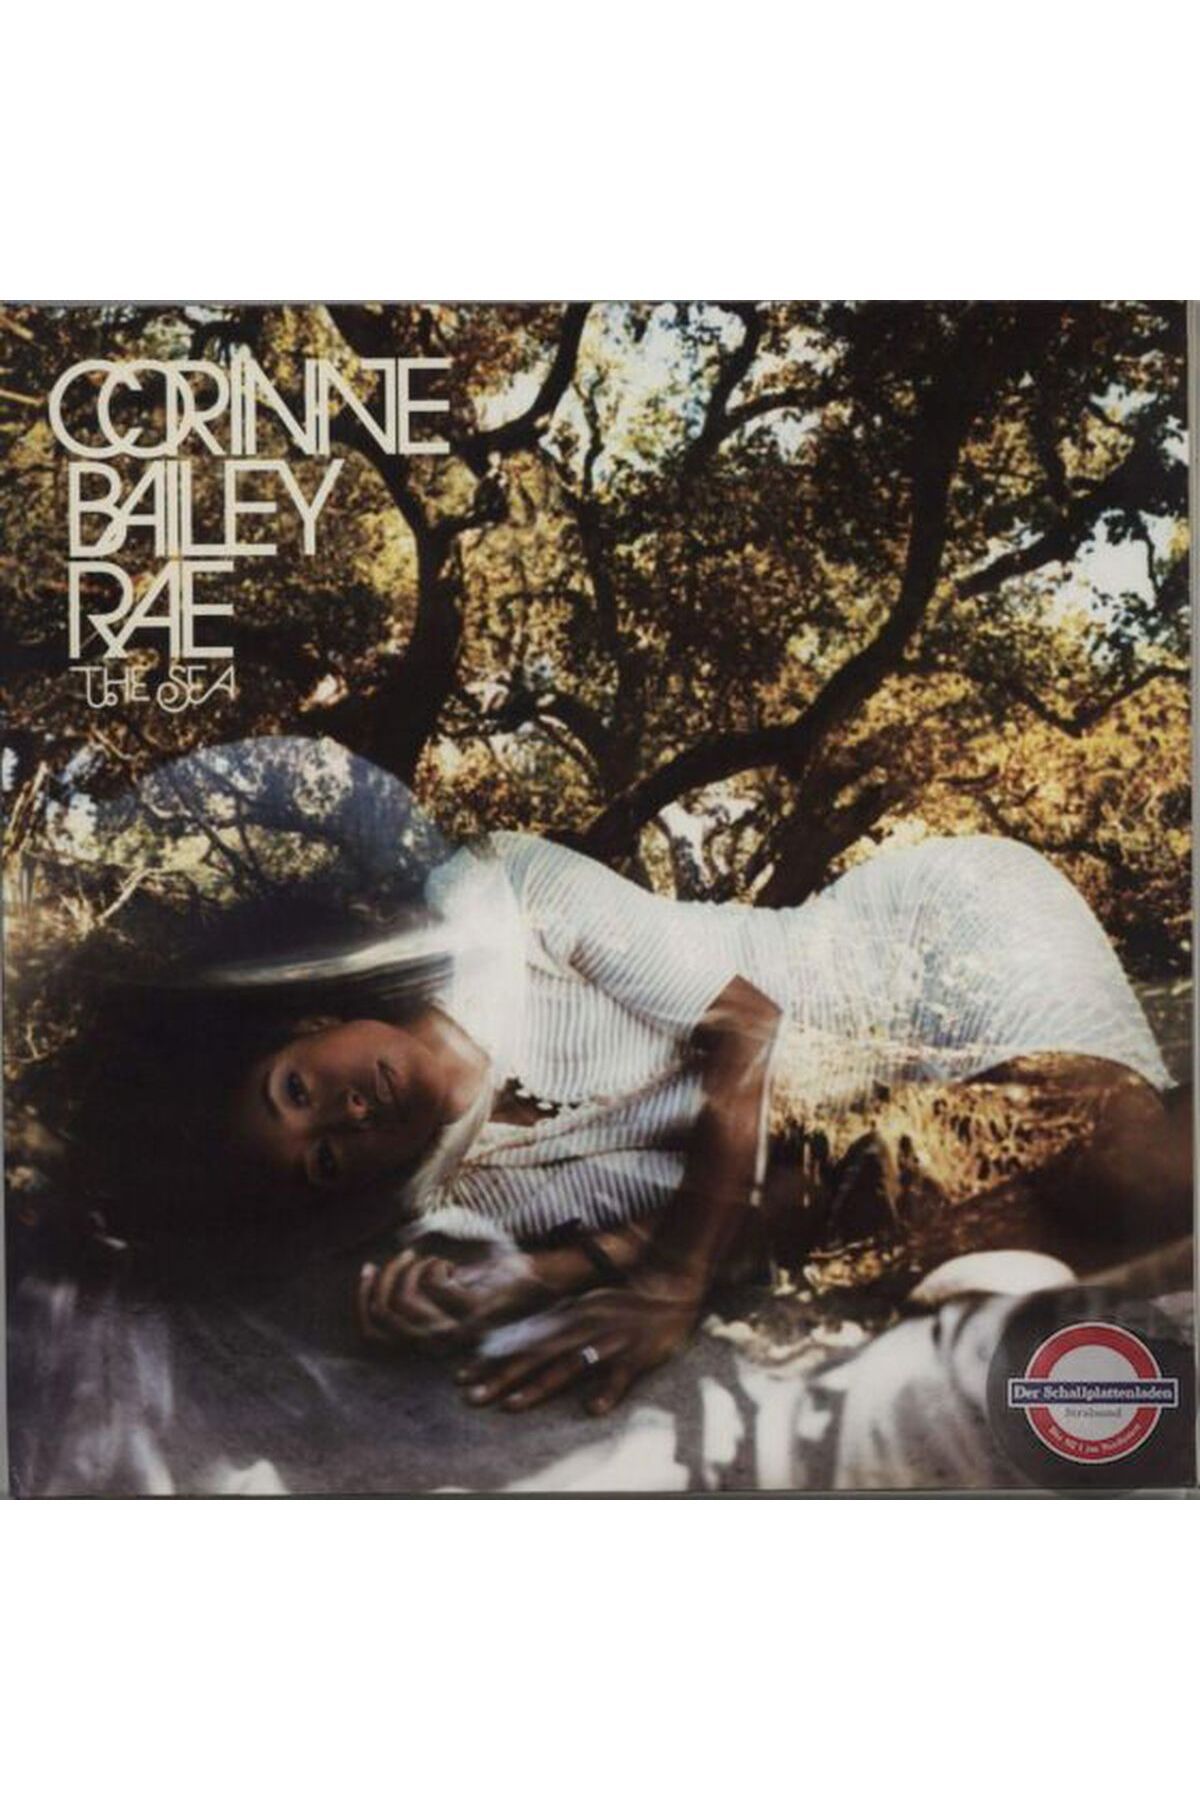 Universal Corinne Bailey Rae The Sea Plak (Coloured Vinyl)